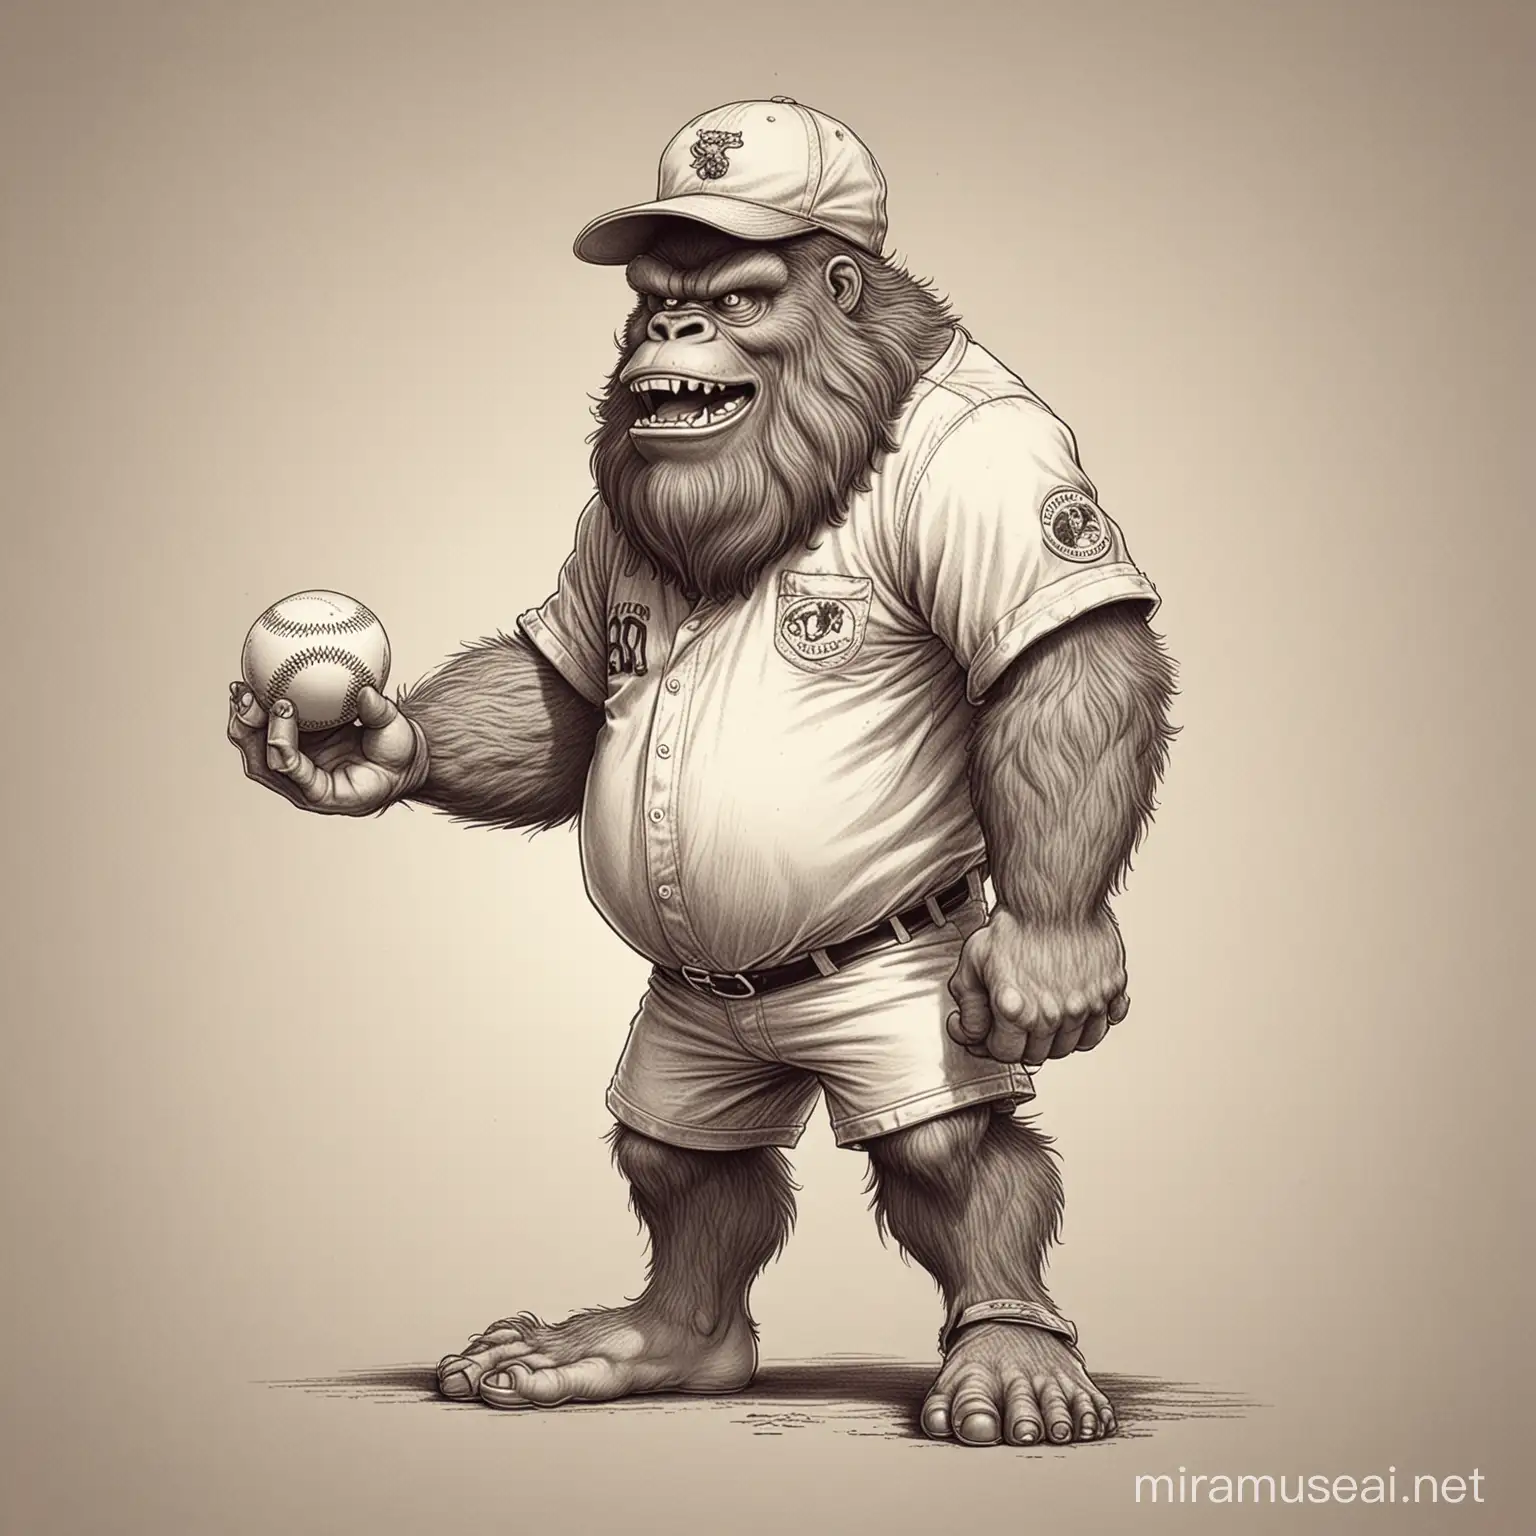 Bigfoot Enjoys Baseball in Vintage Looney Tunes Style